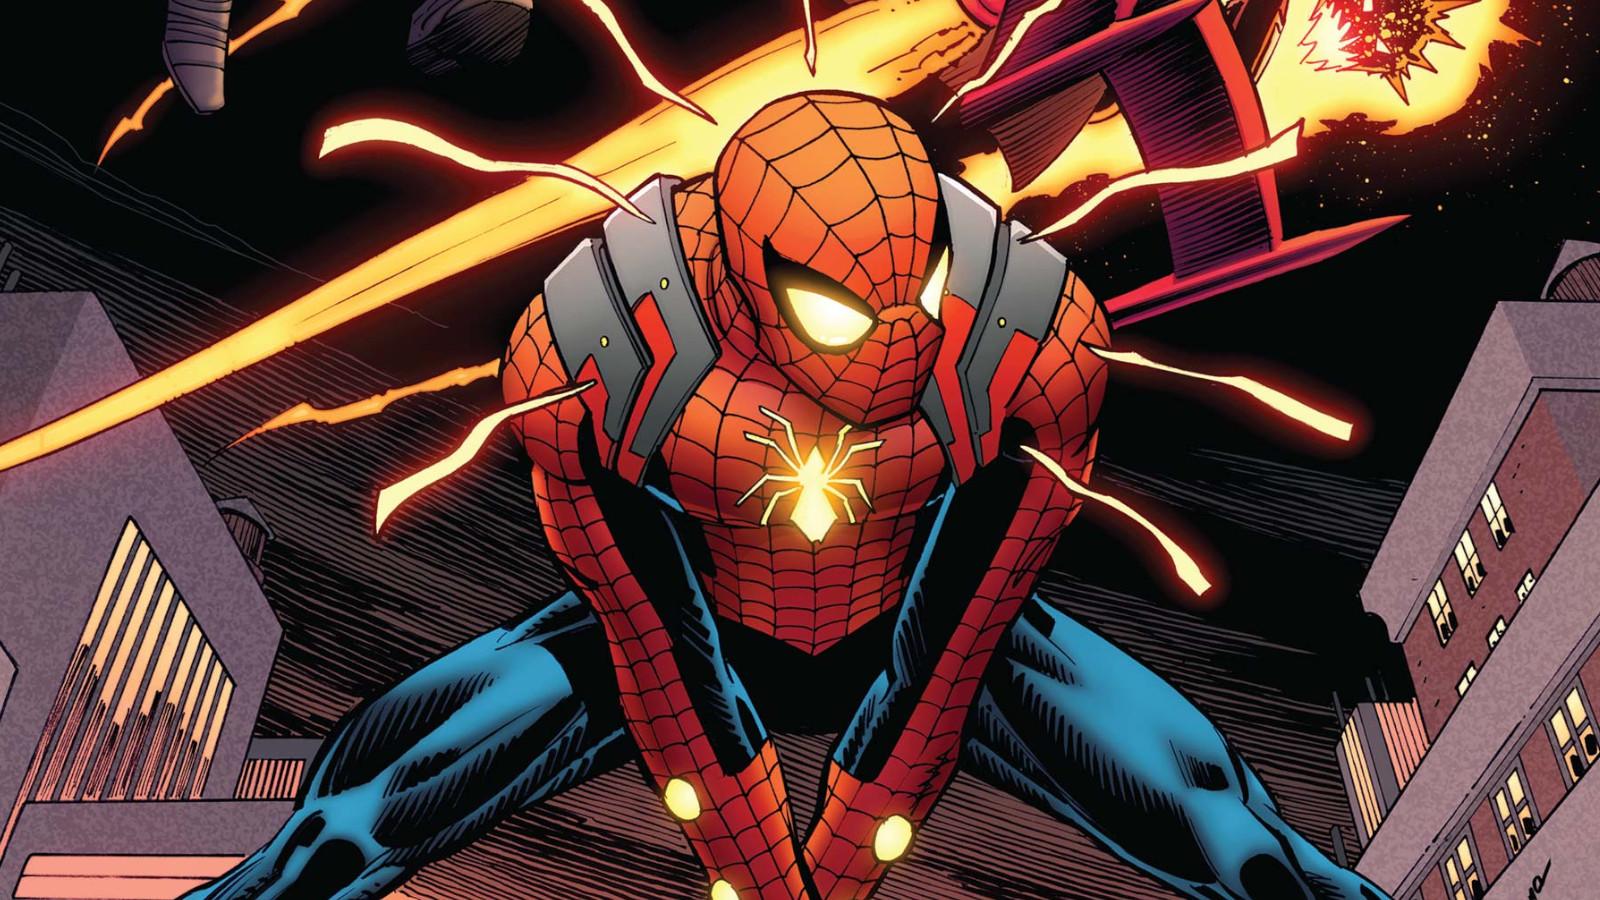 Amazing Spider-Man #32 cover art